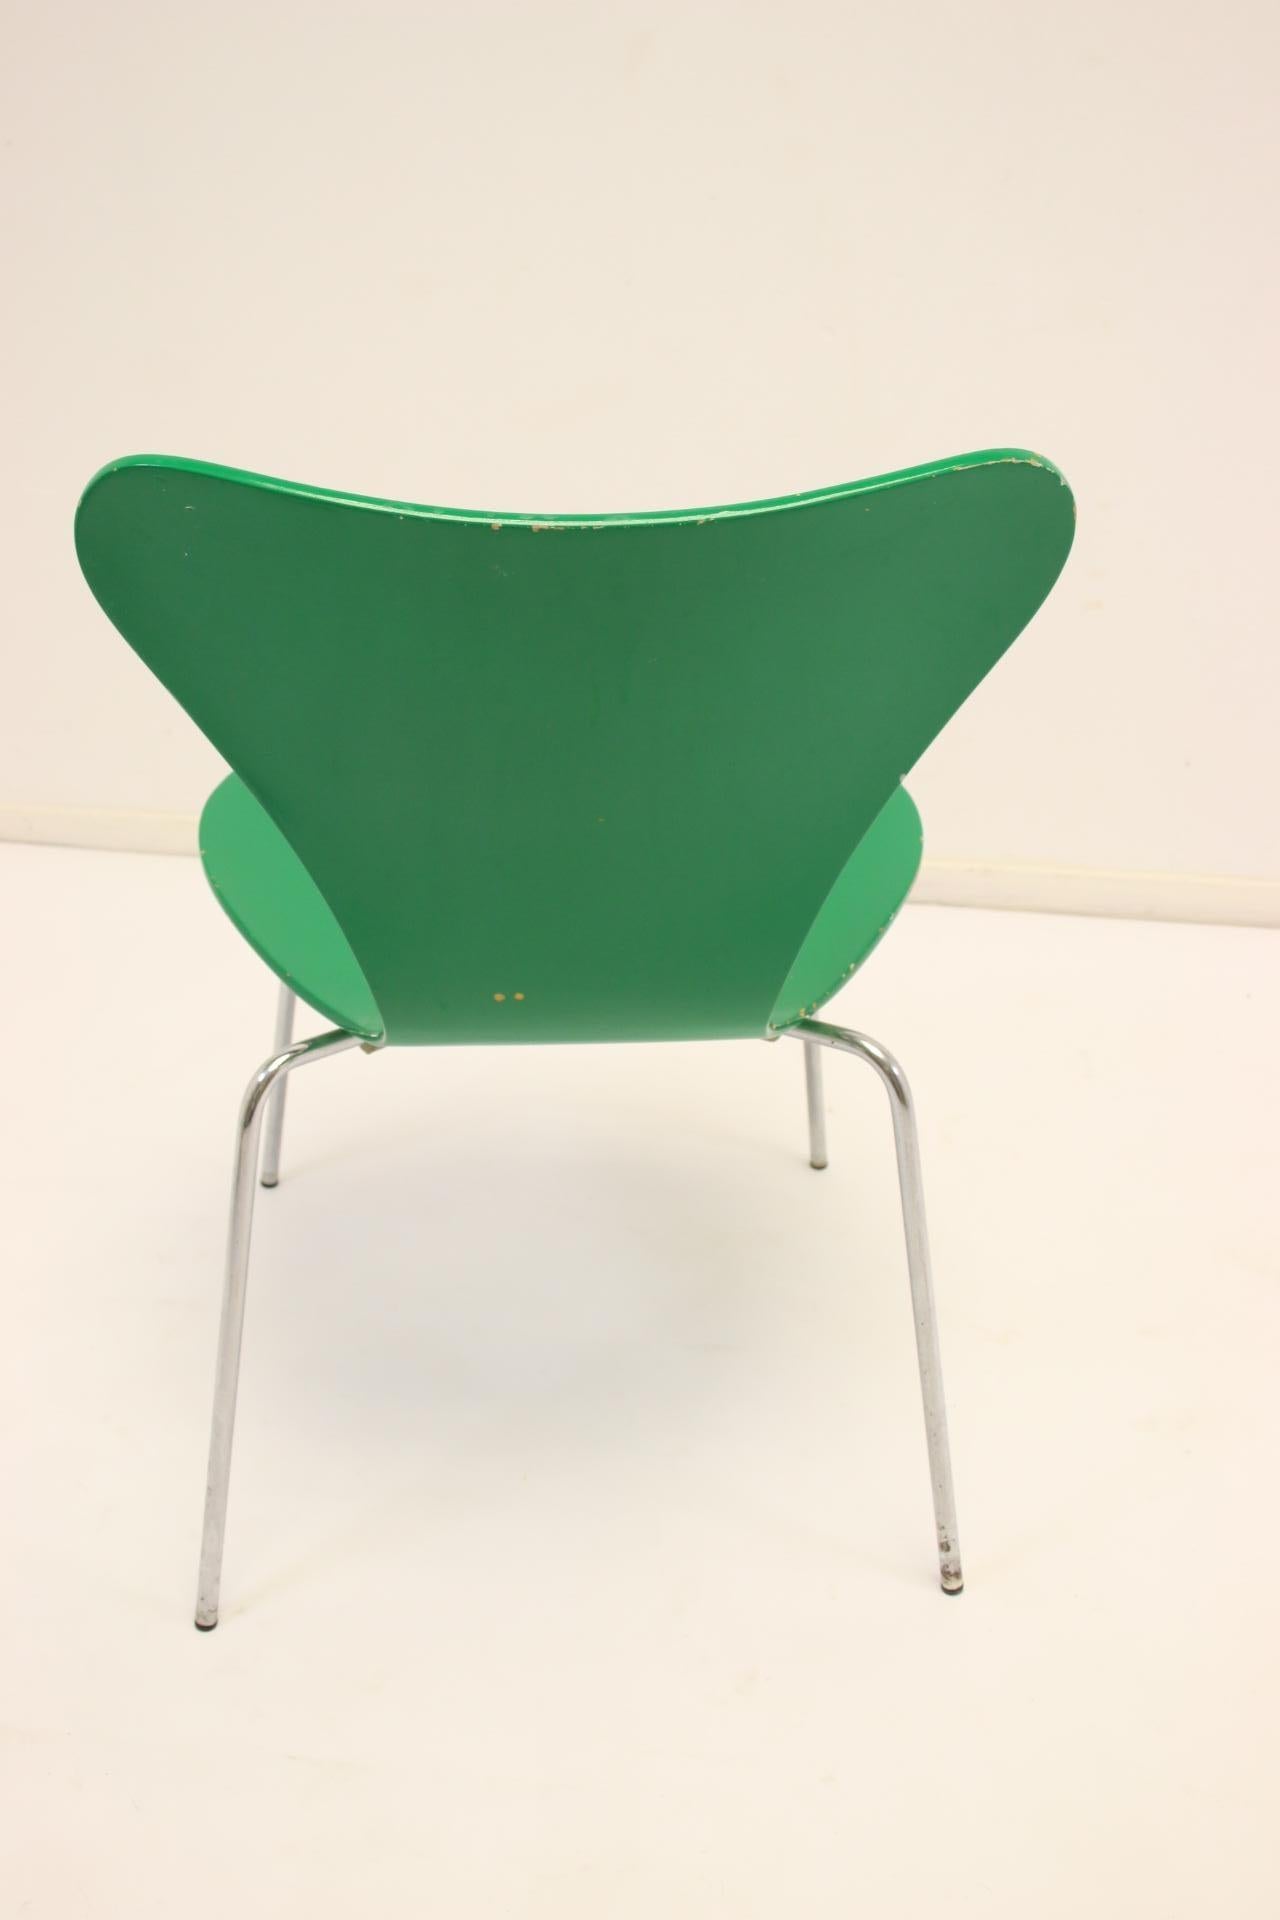 Danish Model 3107 Dining Table Chair Green by Arne Jacobsen, 1979